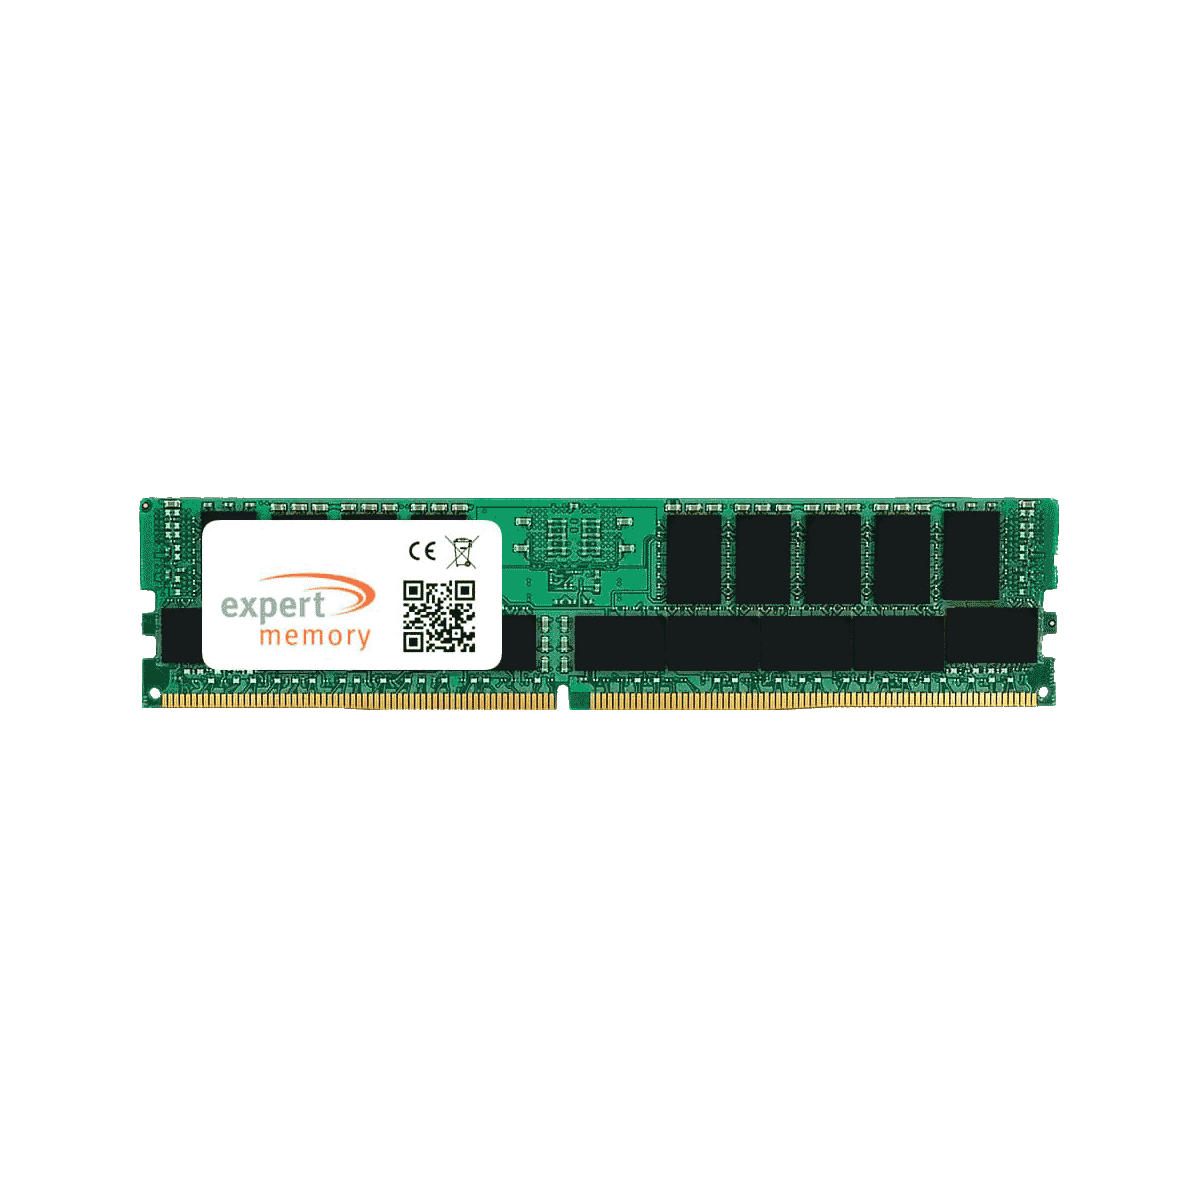 Supermicro EXPERT 8 Memory DDR4 Upgrade Mainboard RDIMM GB 8GB MEMORY 2Rx4 2400 RAM X10DRi-LN4+, X10DRi-T4+ Workstation/Server